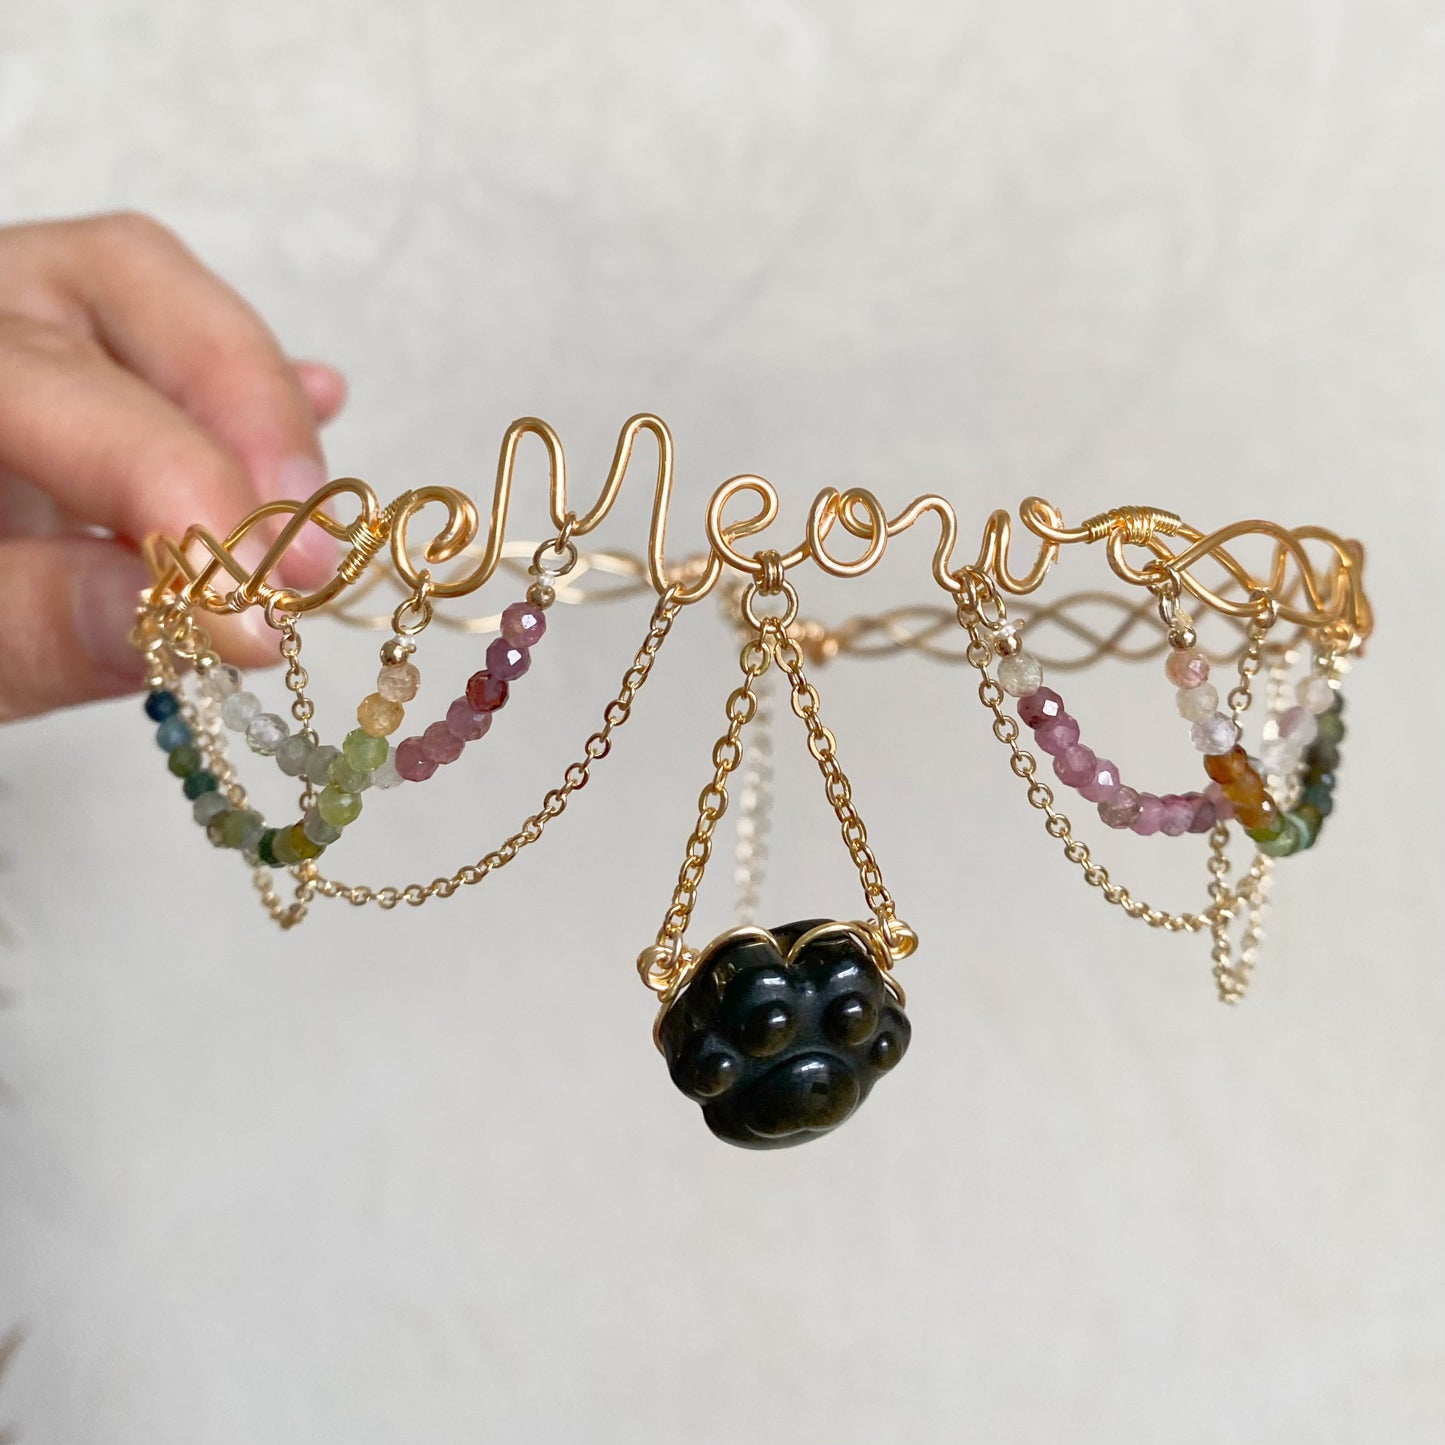 Handmade Meow Choker - Wire Wrapped Jewelry